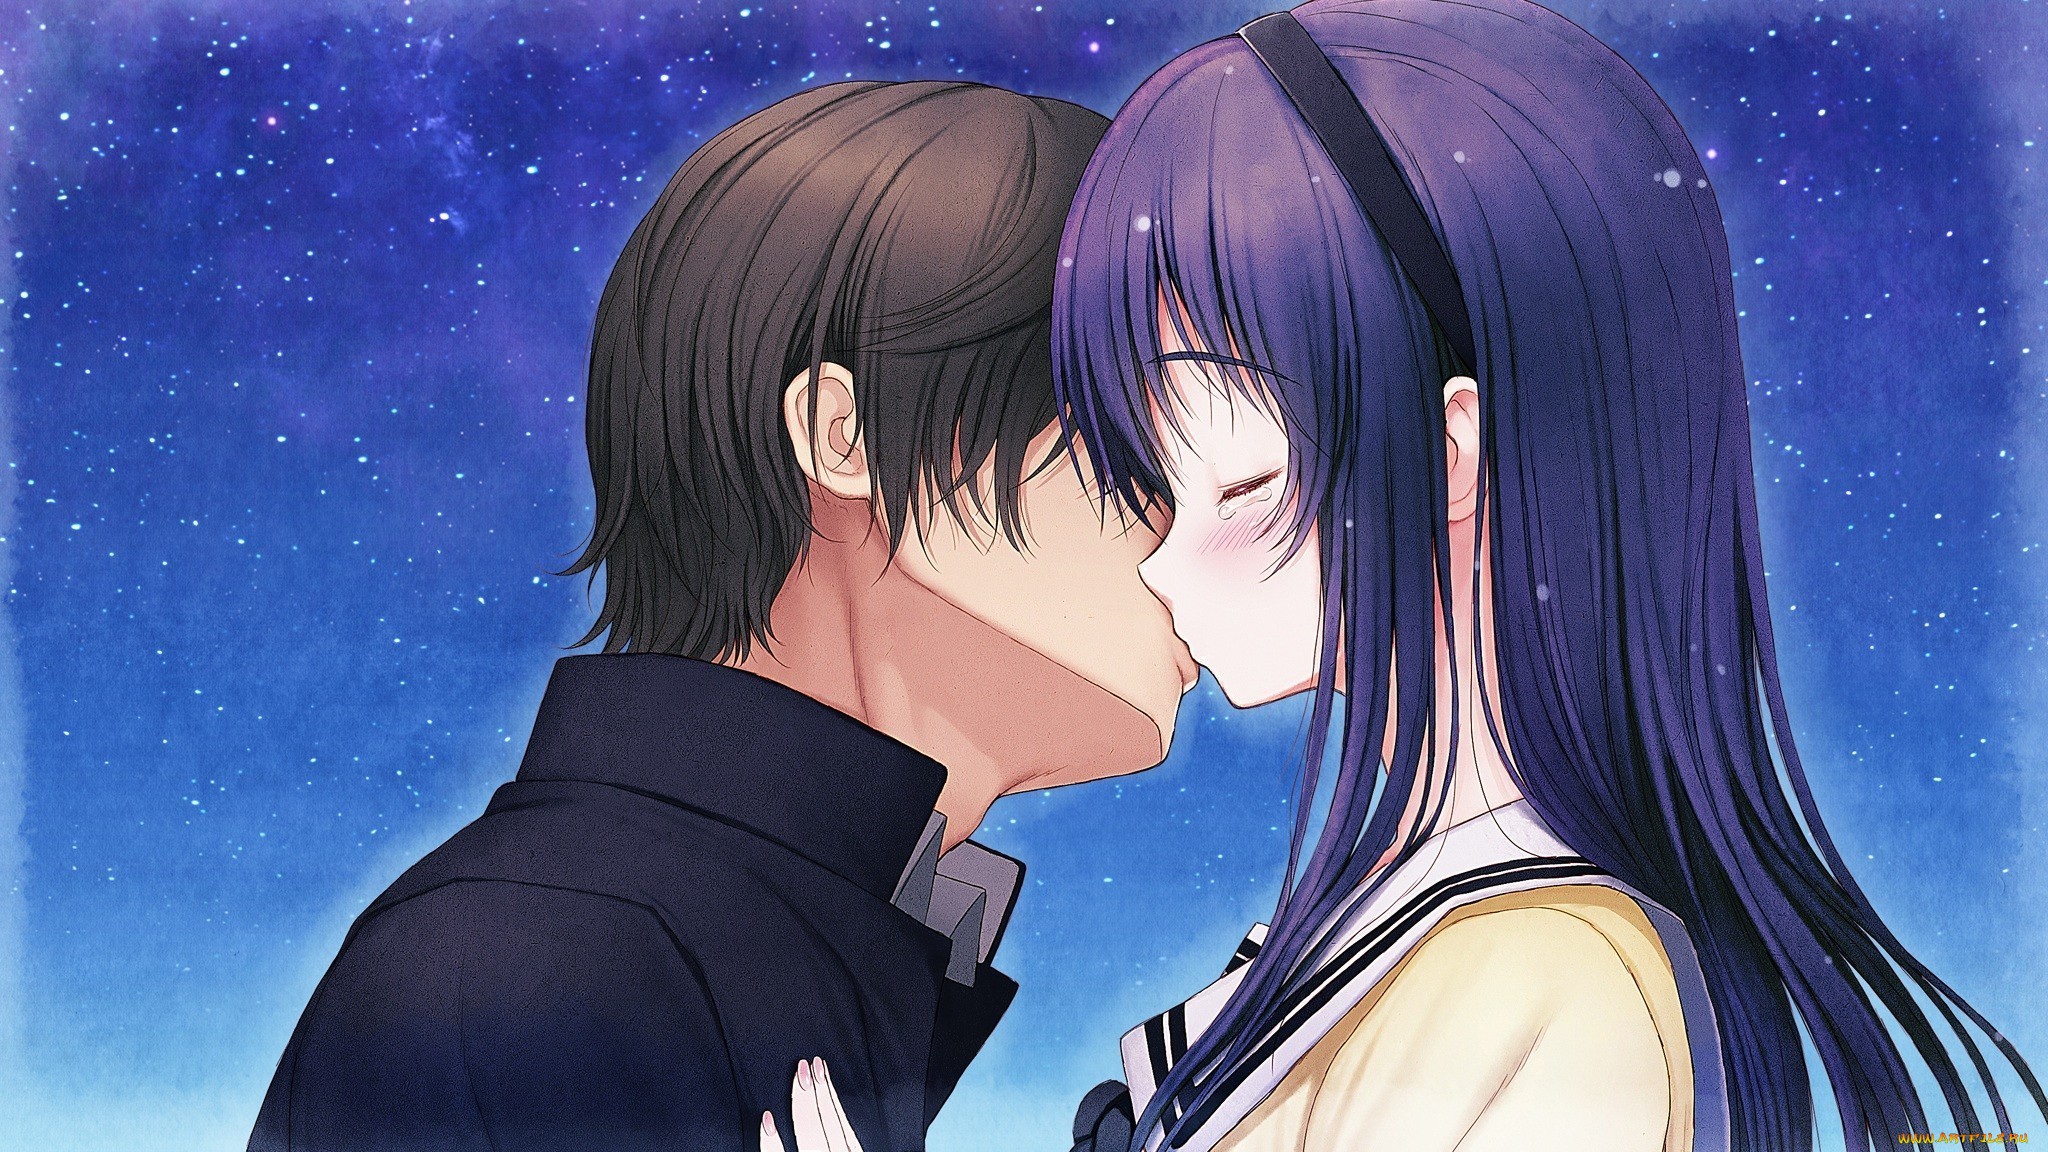 Mouth, Anime, Kiss, Romance, Romance Film Hd Wallpaper, - Anime Romance Kiss List , HD Wallpaper & Backgrounds